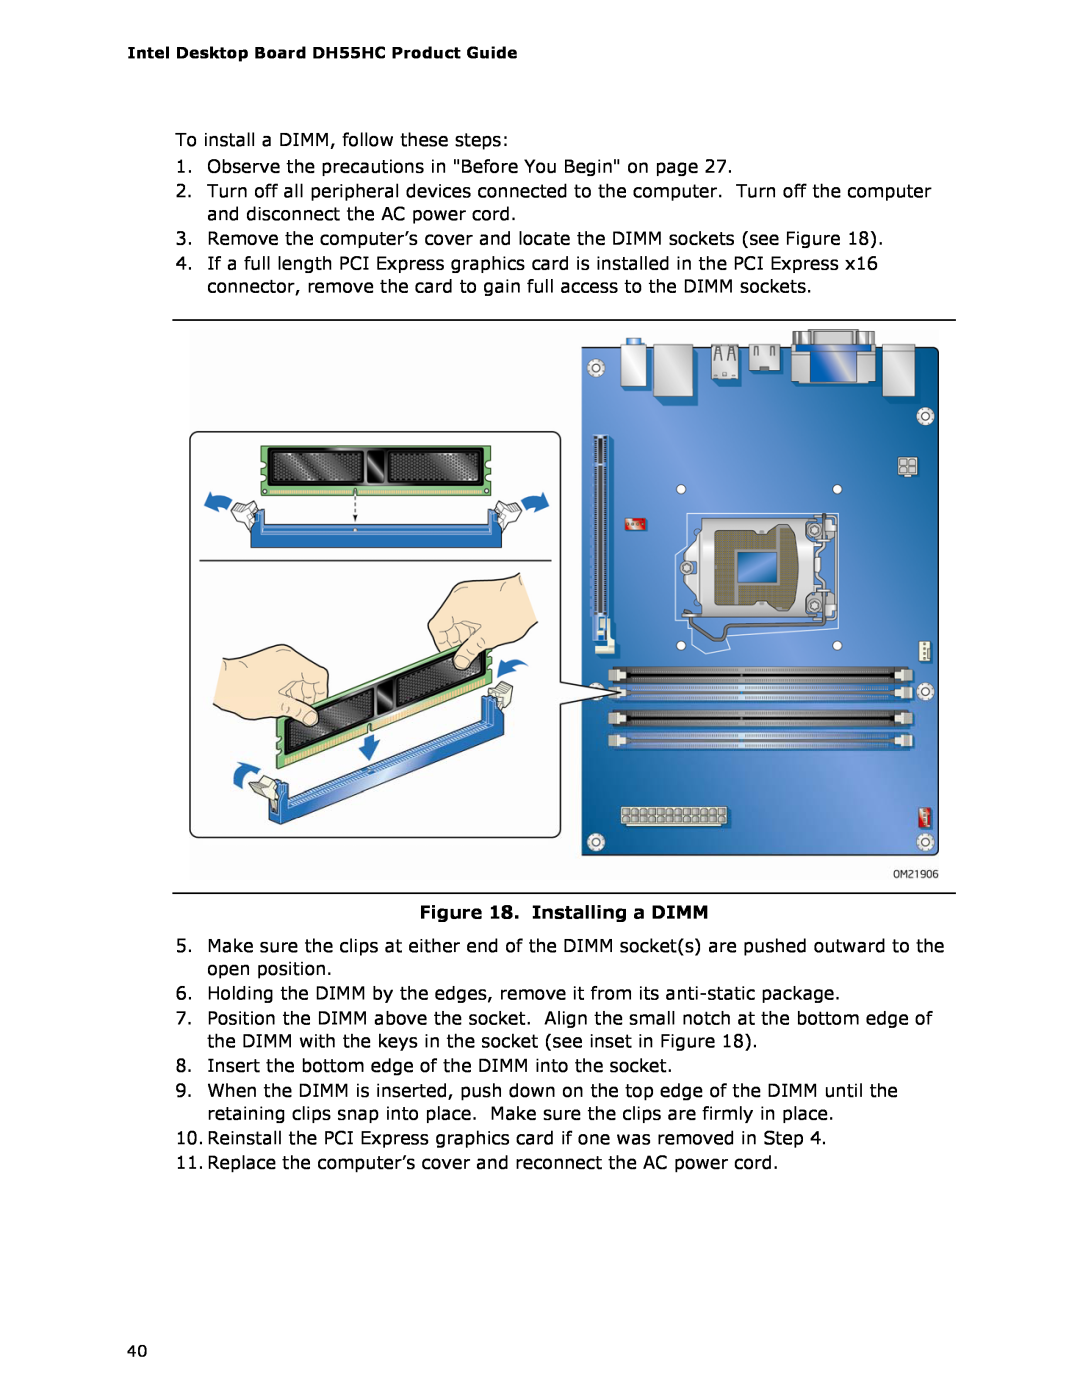 Intel BOXDH55HC manual Installing a DIMM 